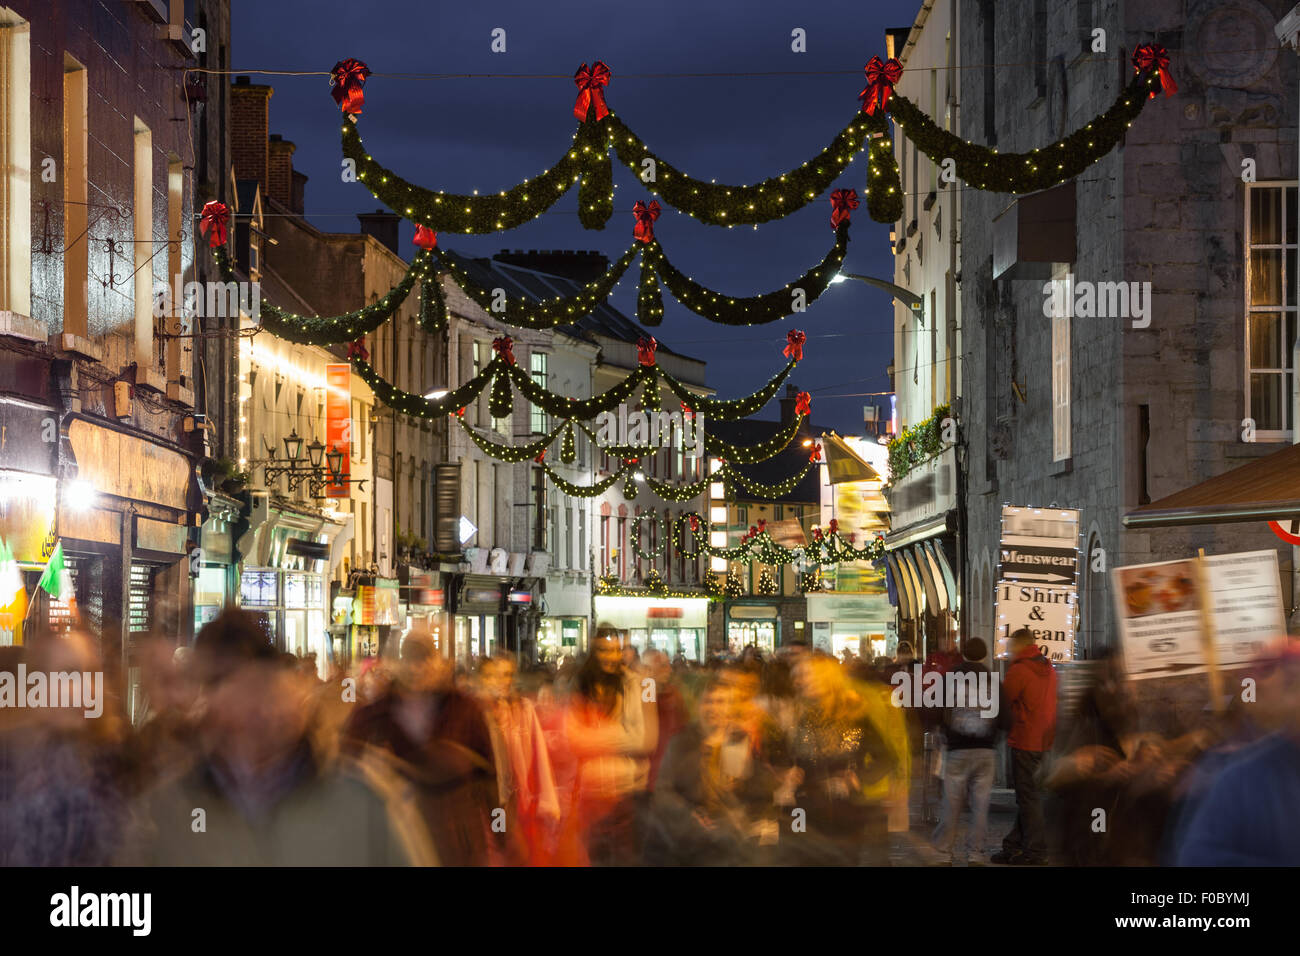 Shop street at night illuminated with Christmas lights, Galway, Ireland Stock Photo